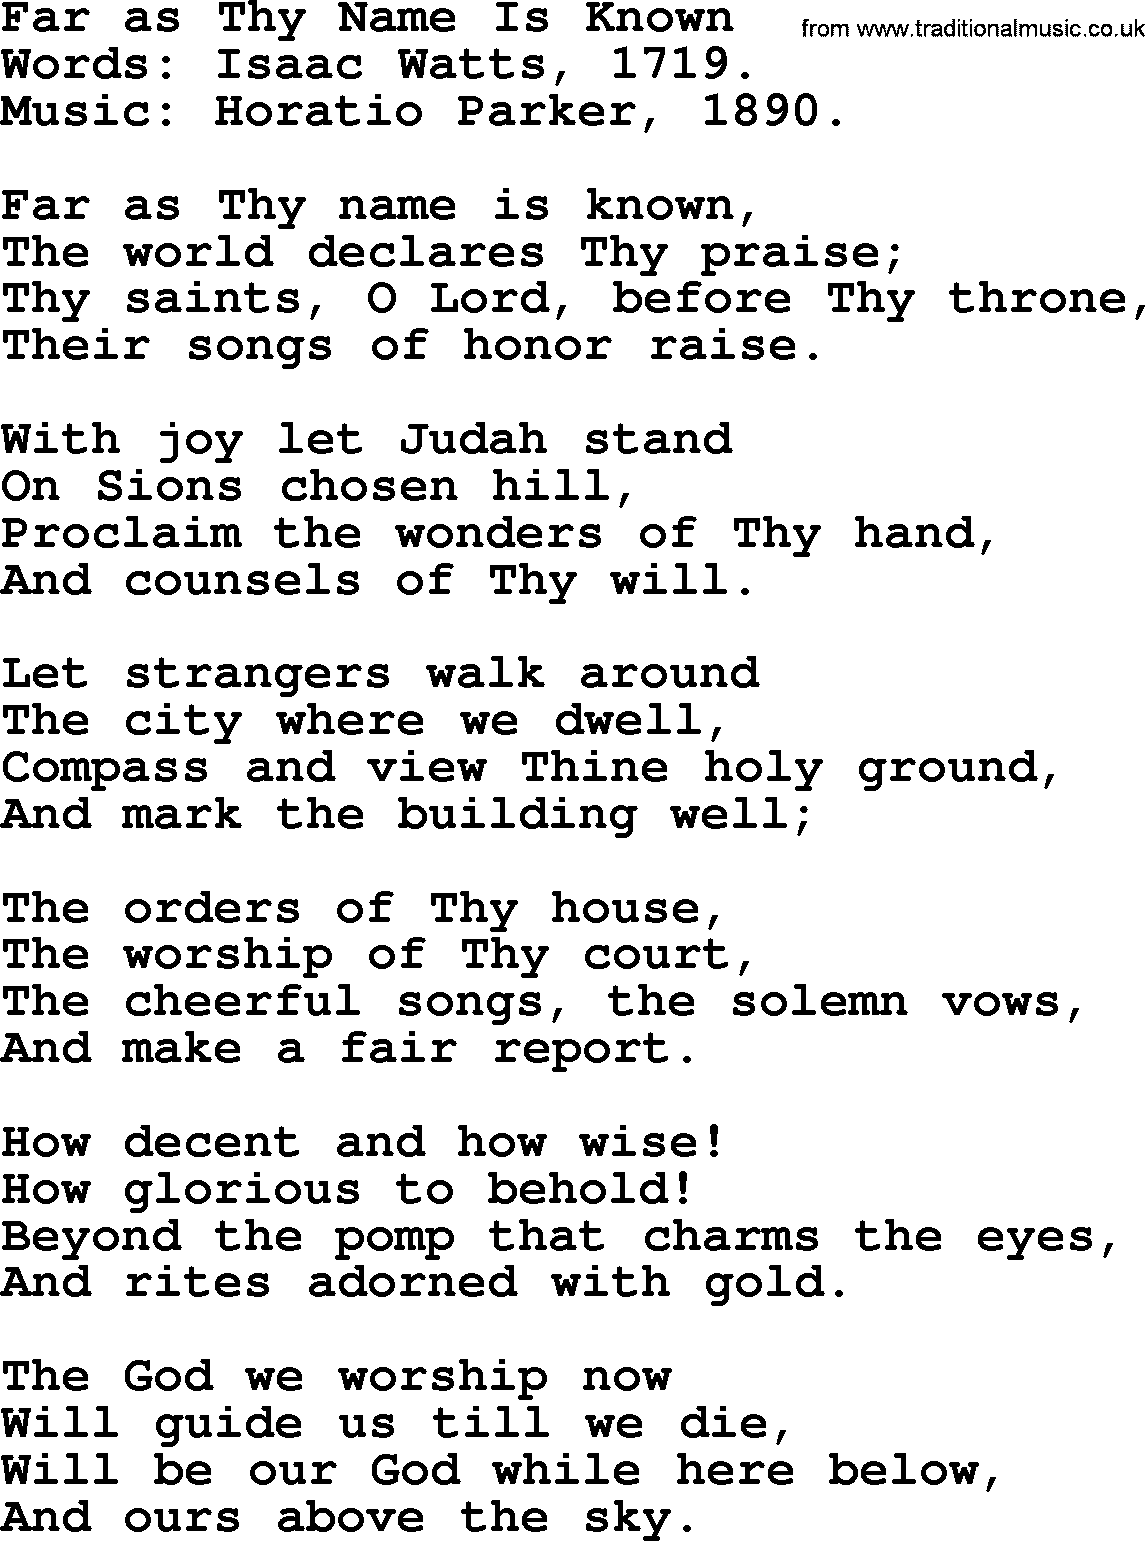 Isaac Watts Christian hymn: Far as Thy Name Is Known- lyricss